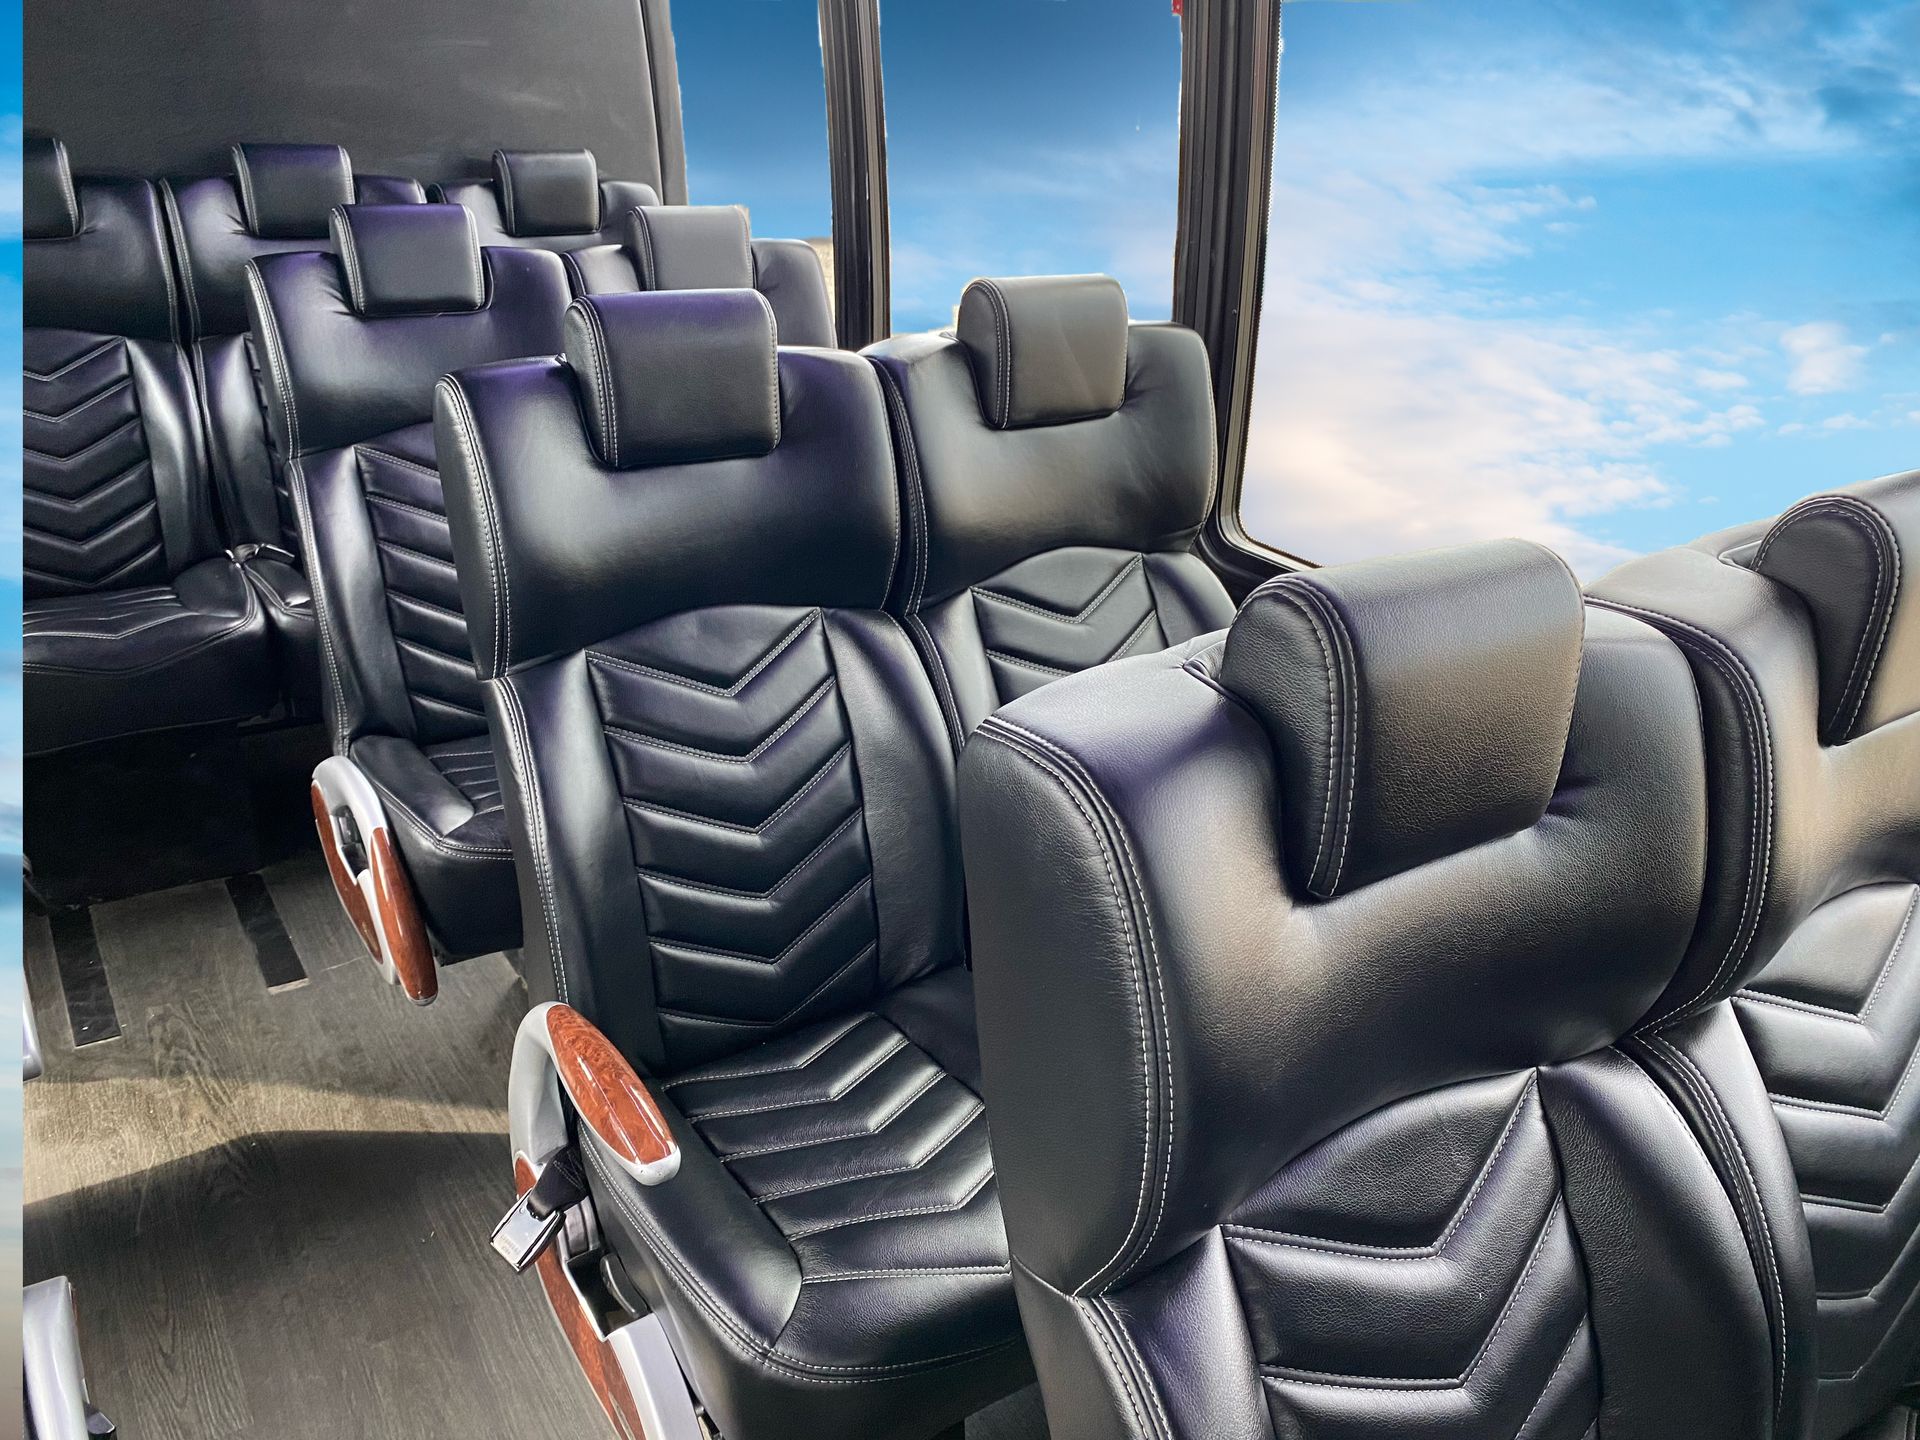 19 passenger executive shuttle bus seating details